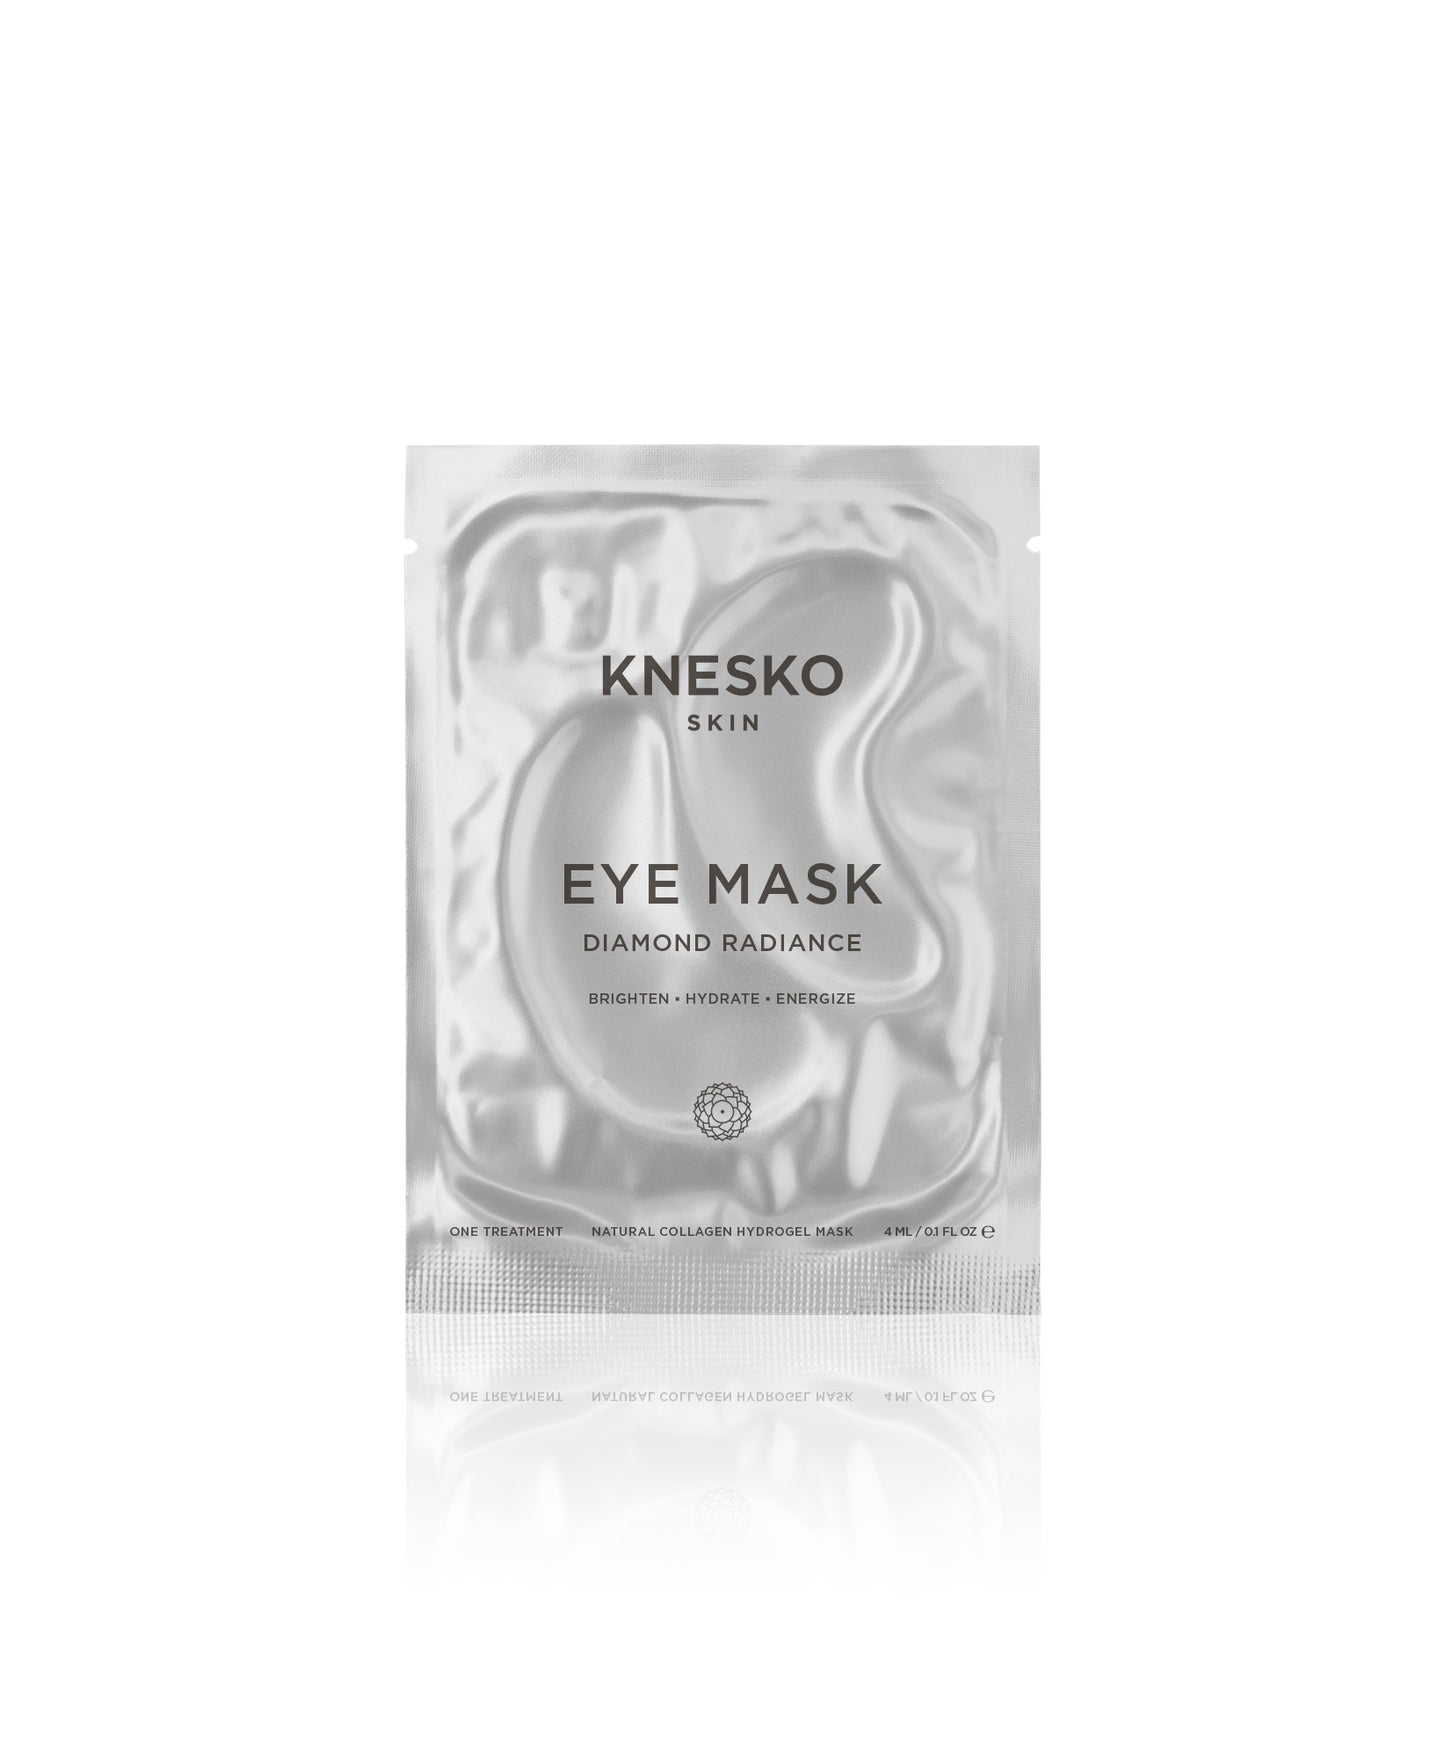 Diamond Radiance Collagen Eye Mask packaging.